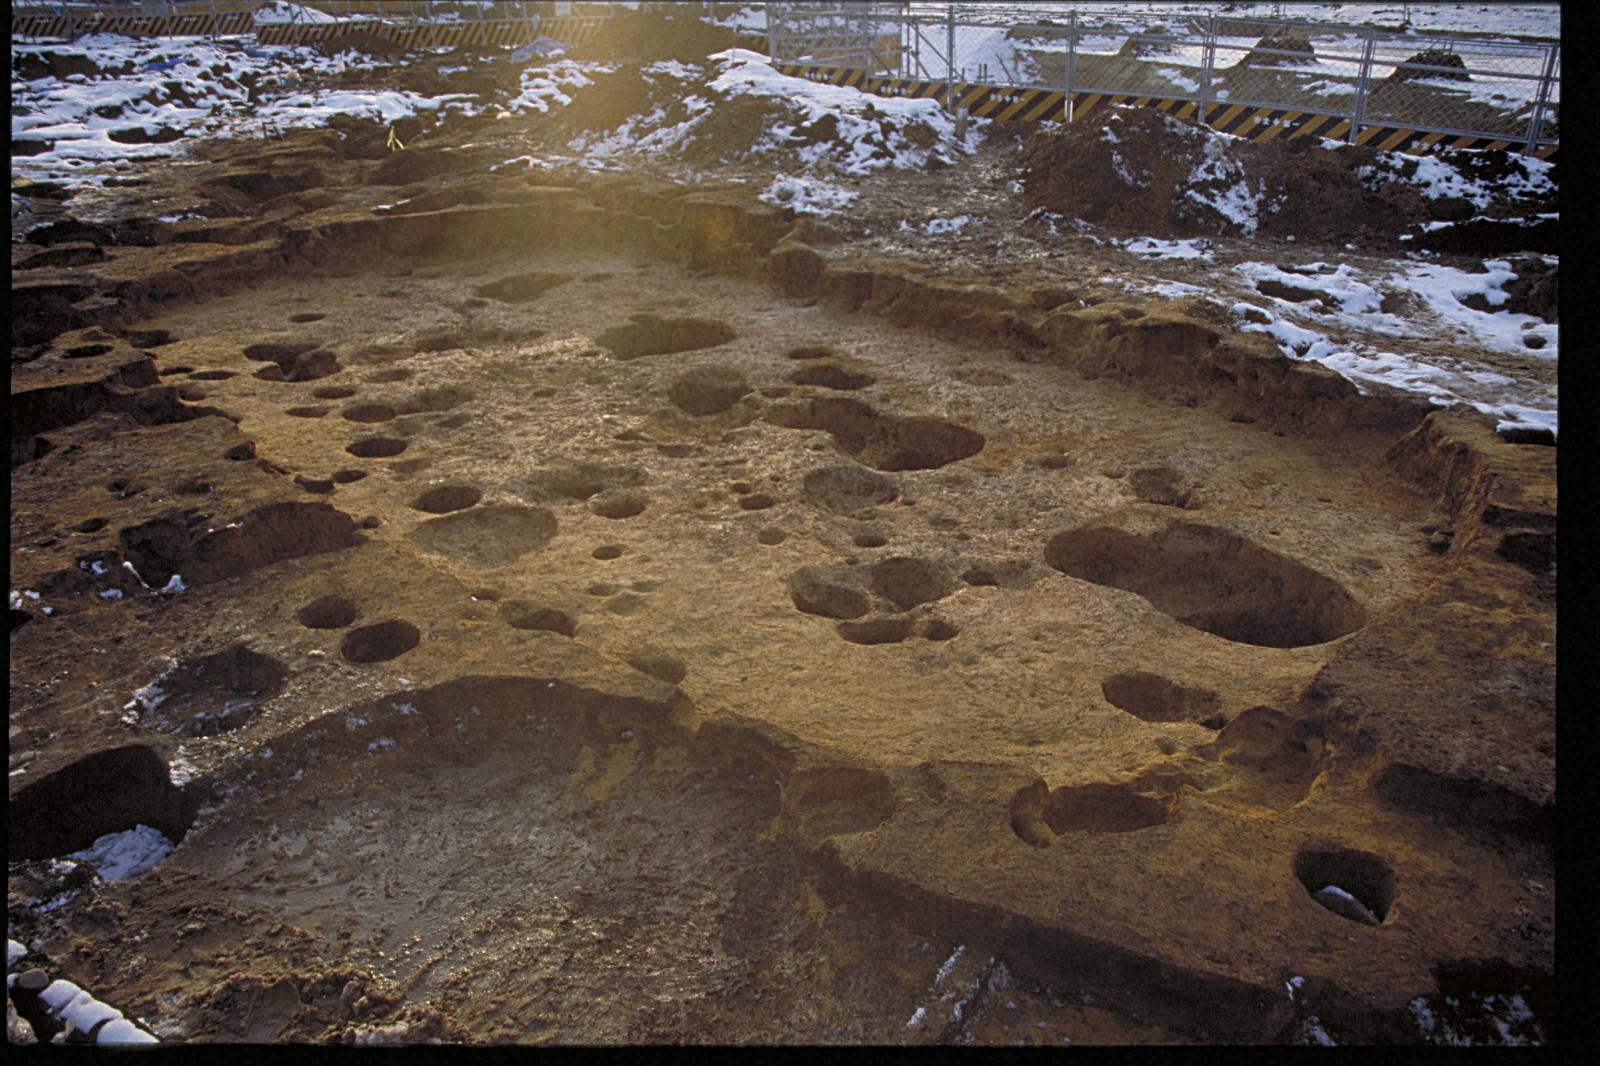 No.120 remains of pit-dwelling